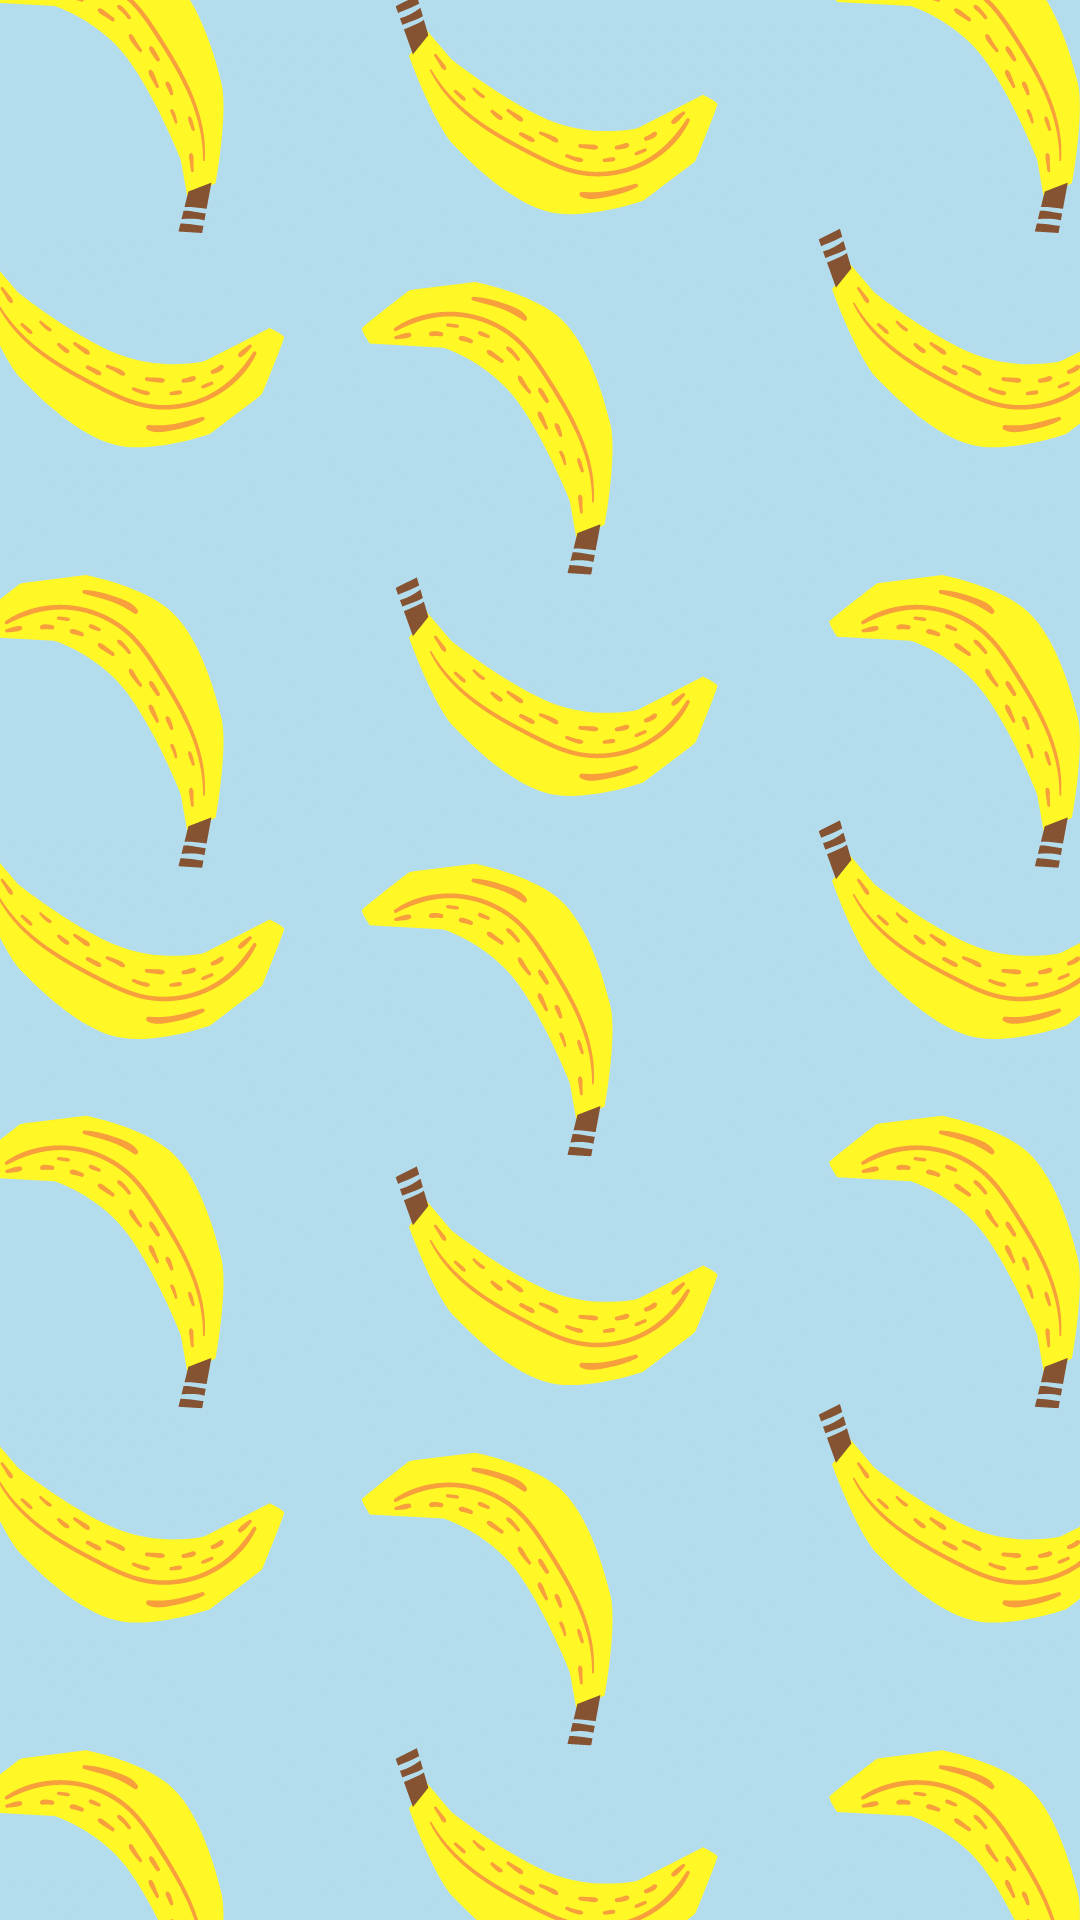 FREE DOWNLOADS: Summer Phone Wallpaper. Banana wallpaper, iPhone wallpaper vintage, iPhone wallpaper